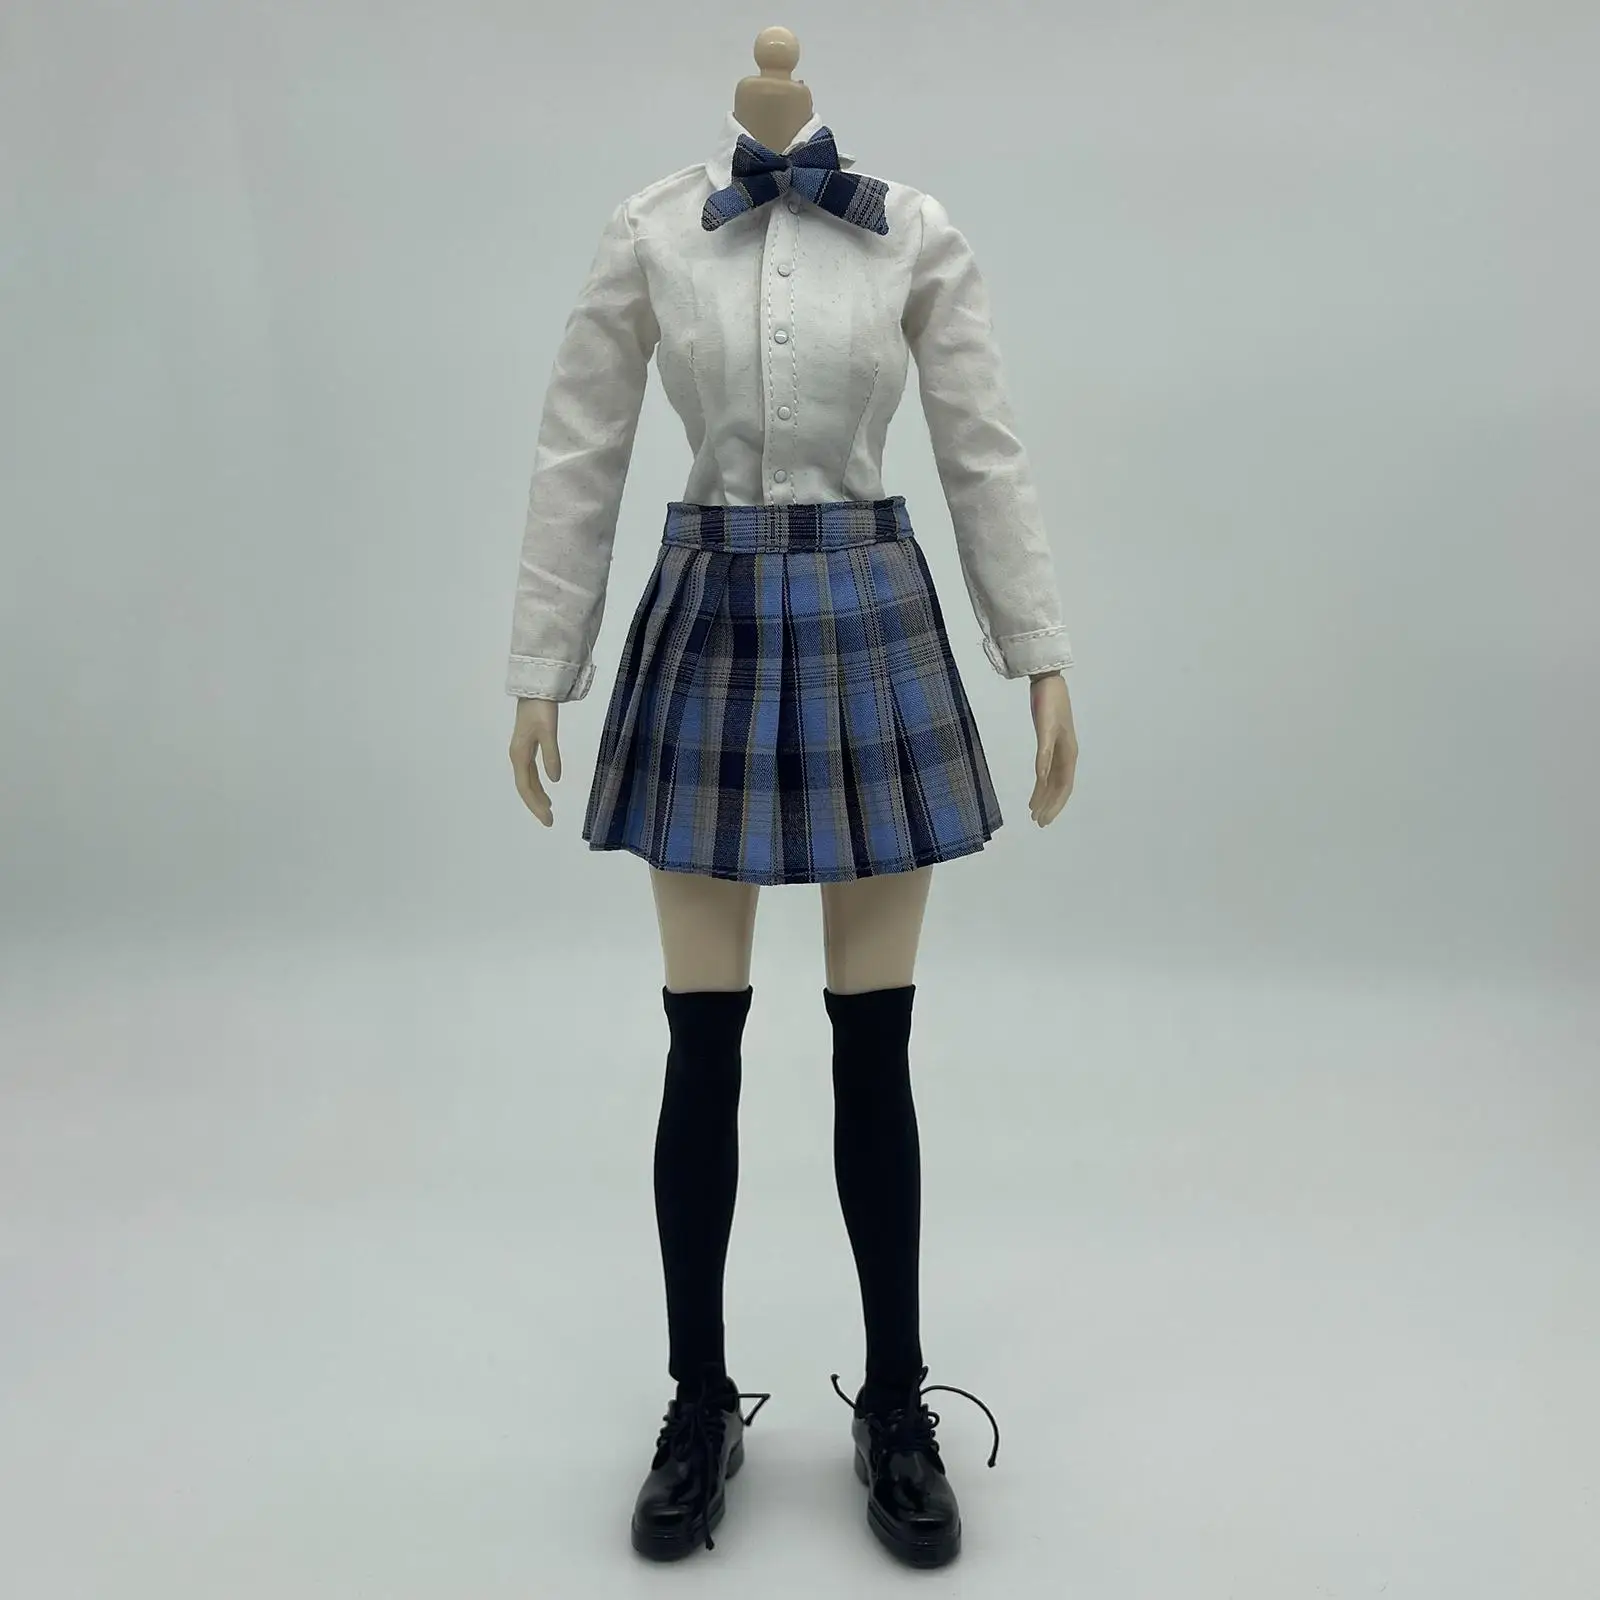 1/6 Girl Suit Uniform Costume for 12`` Female Dolls Figure Accessories Body